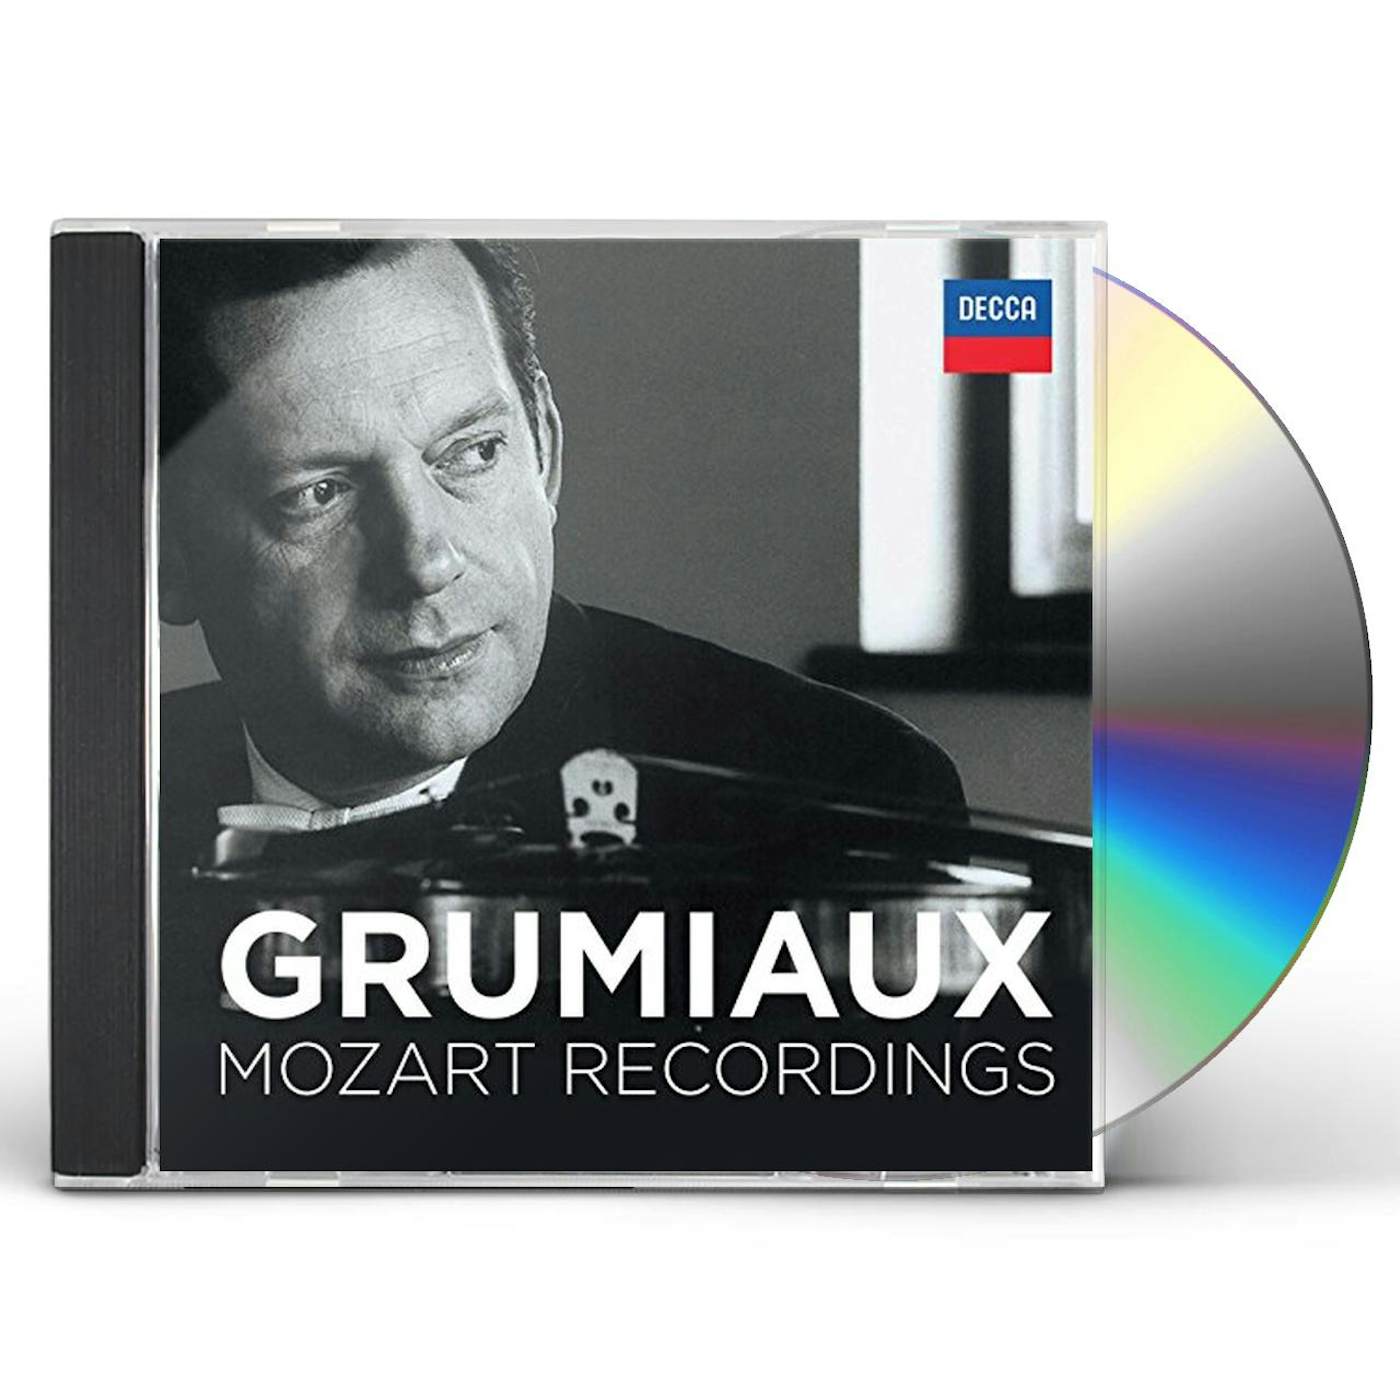 Arthur Grumiaux MOZART RECORDINGS CD